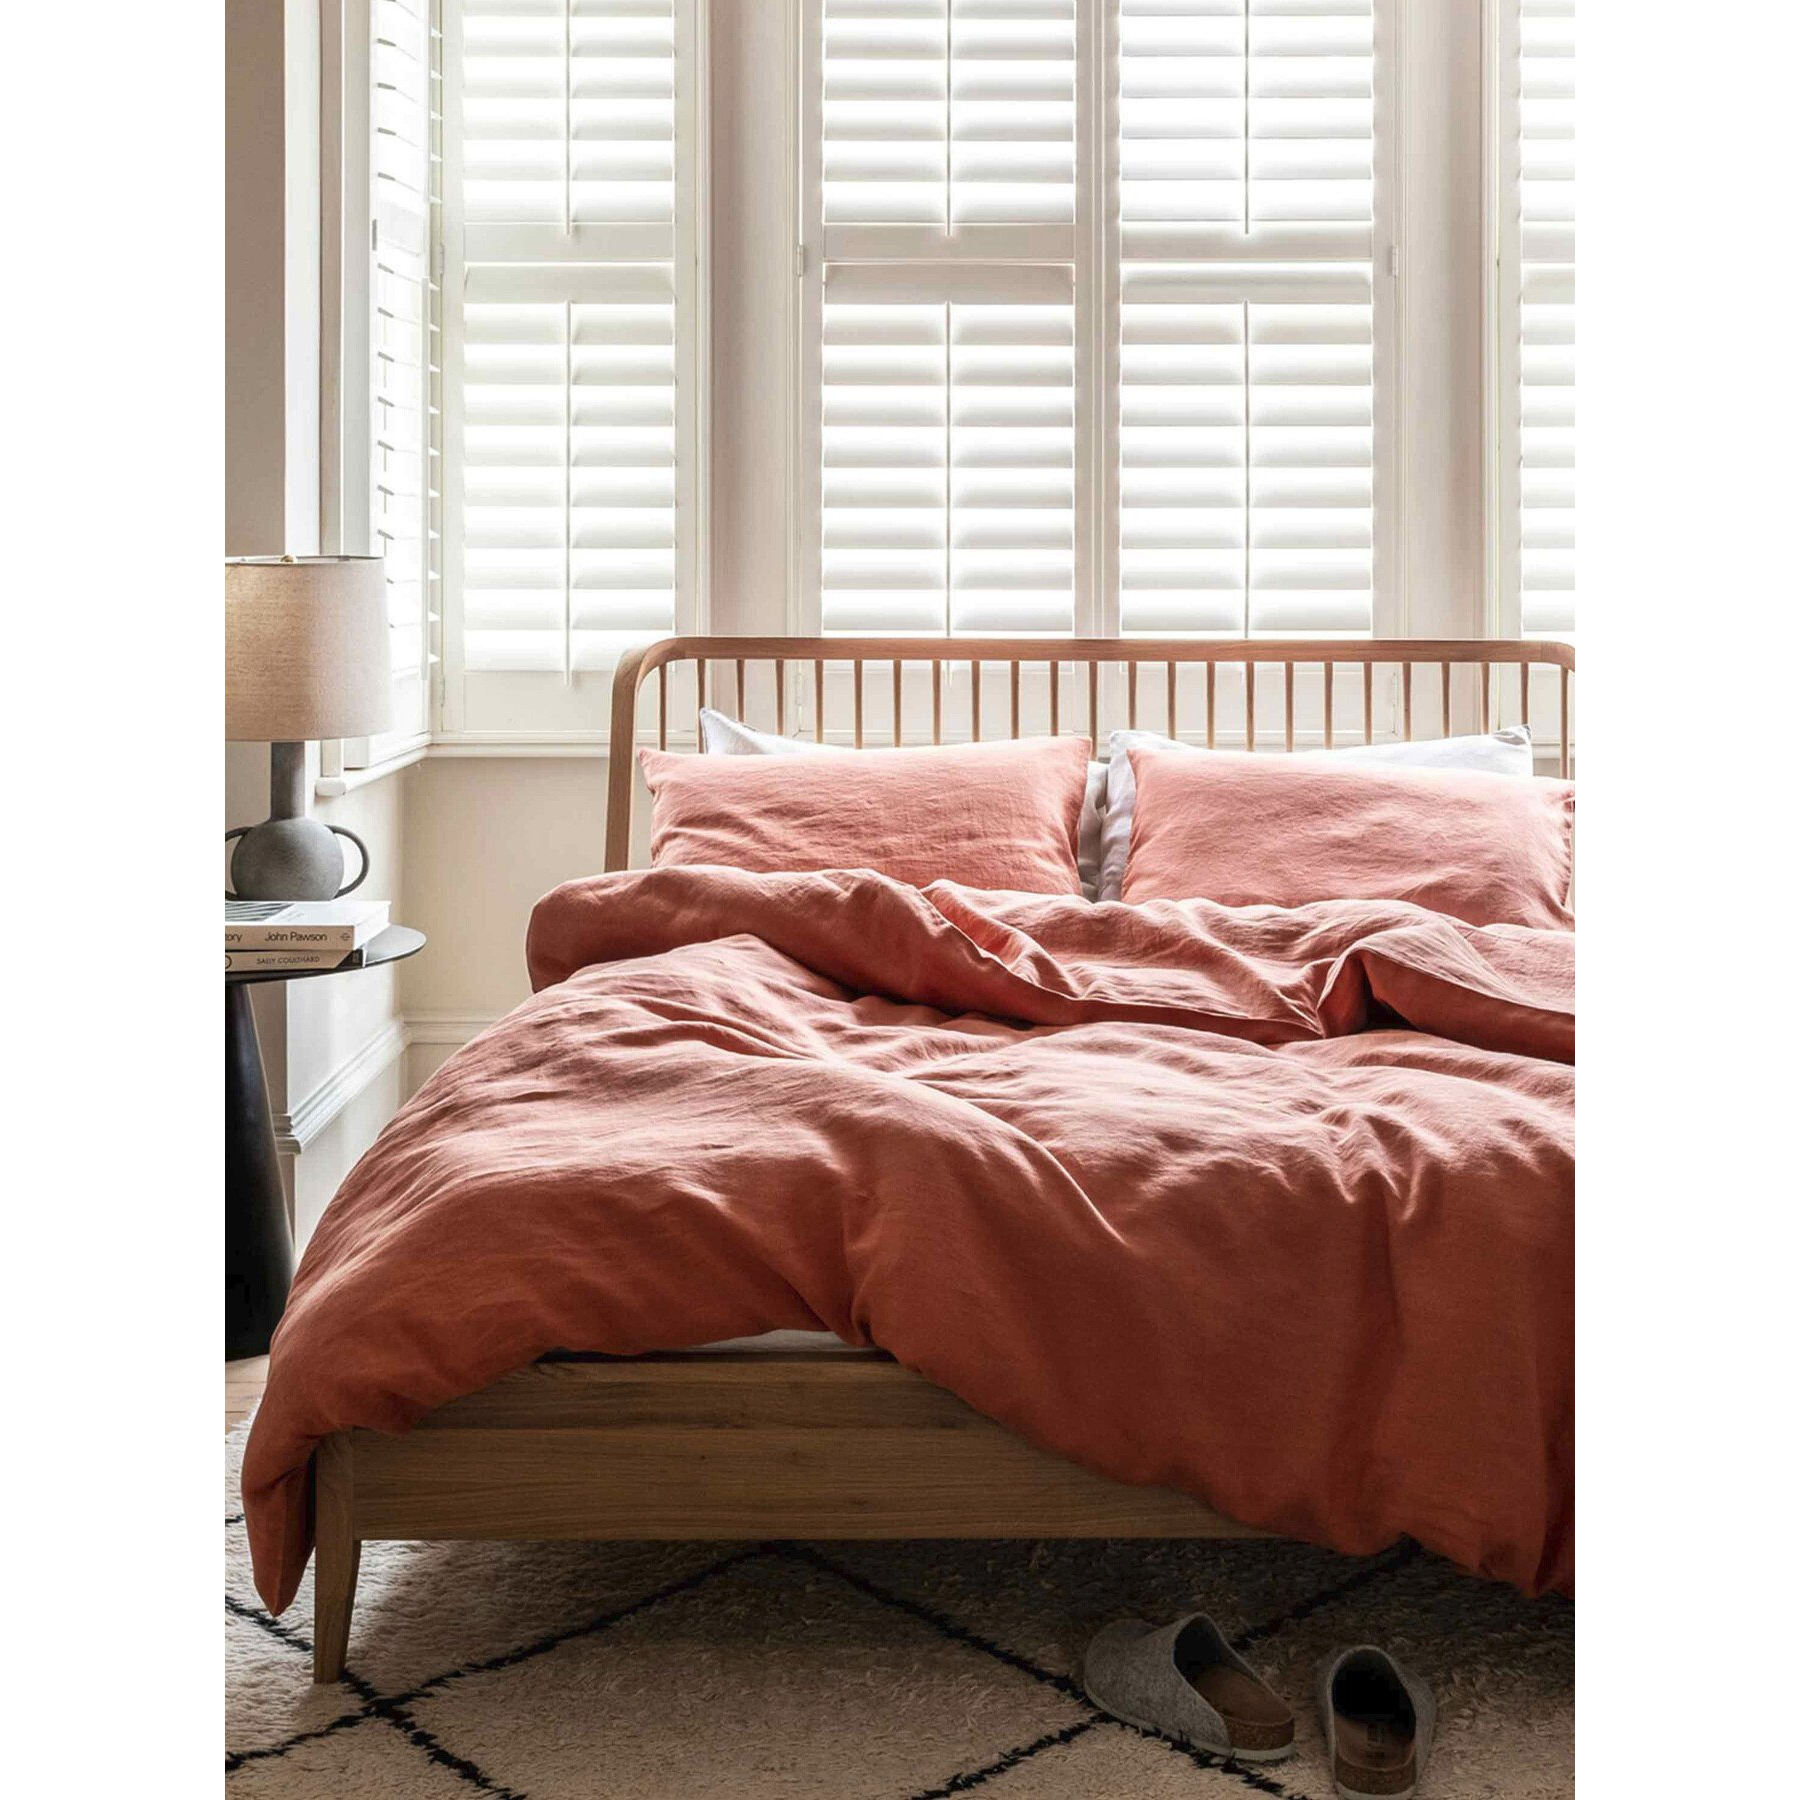 Piglet in Bed Linen Flat Sheet - Size Double Orange - image 1